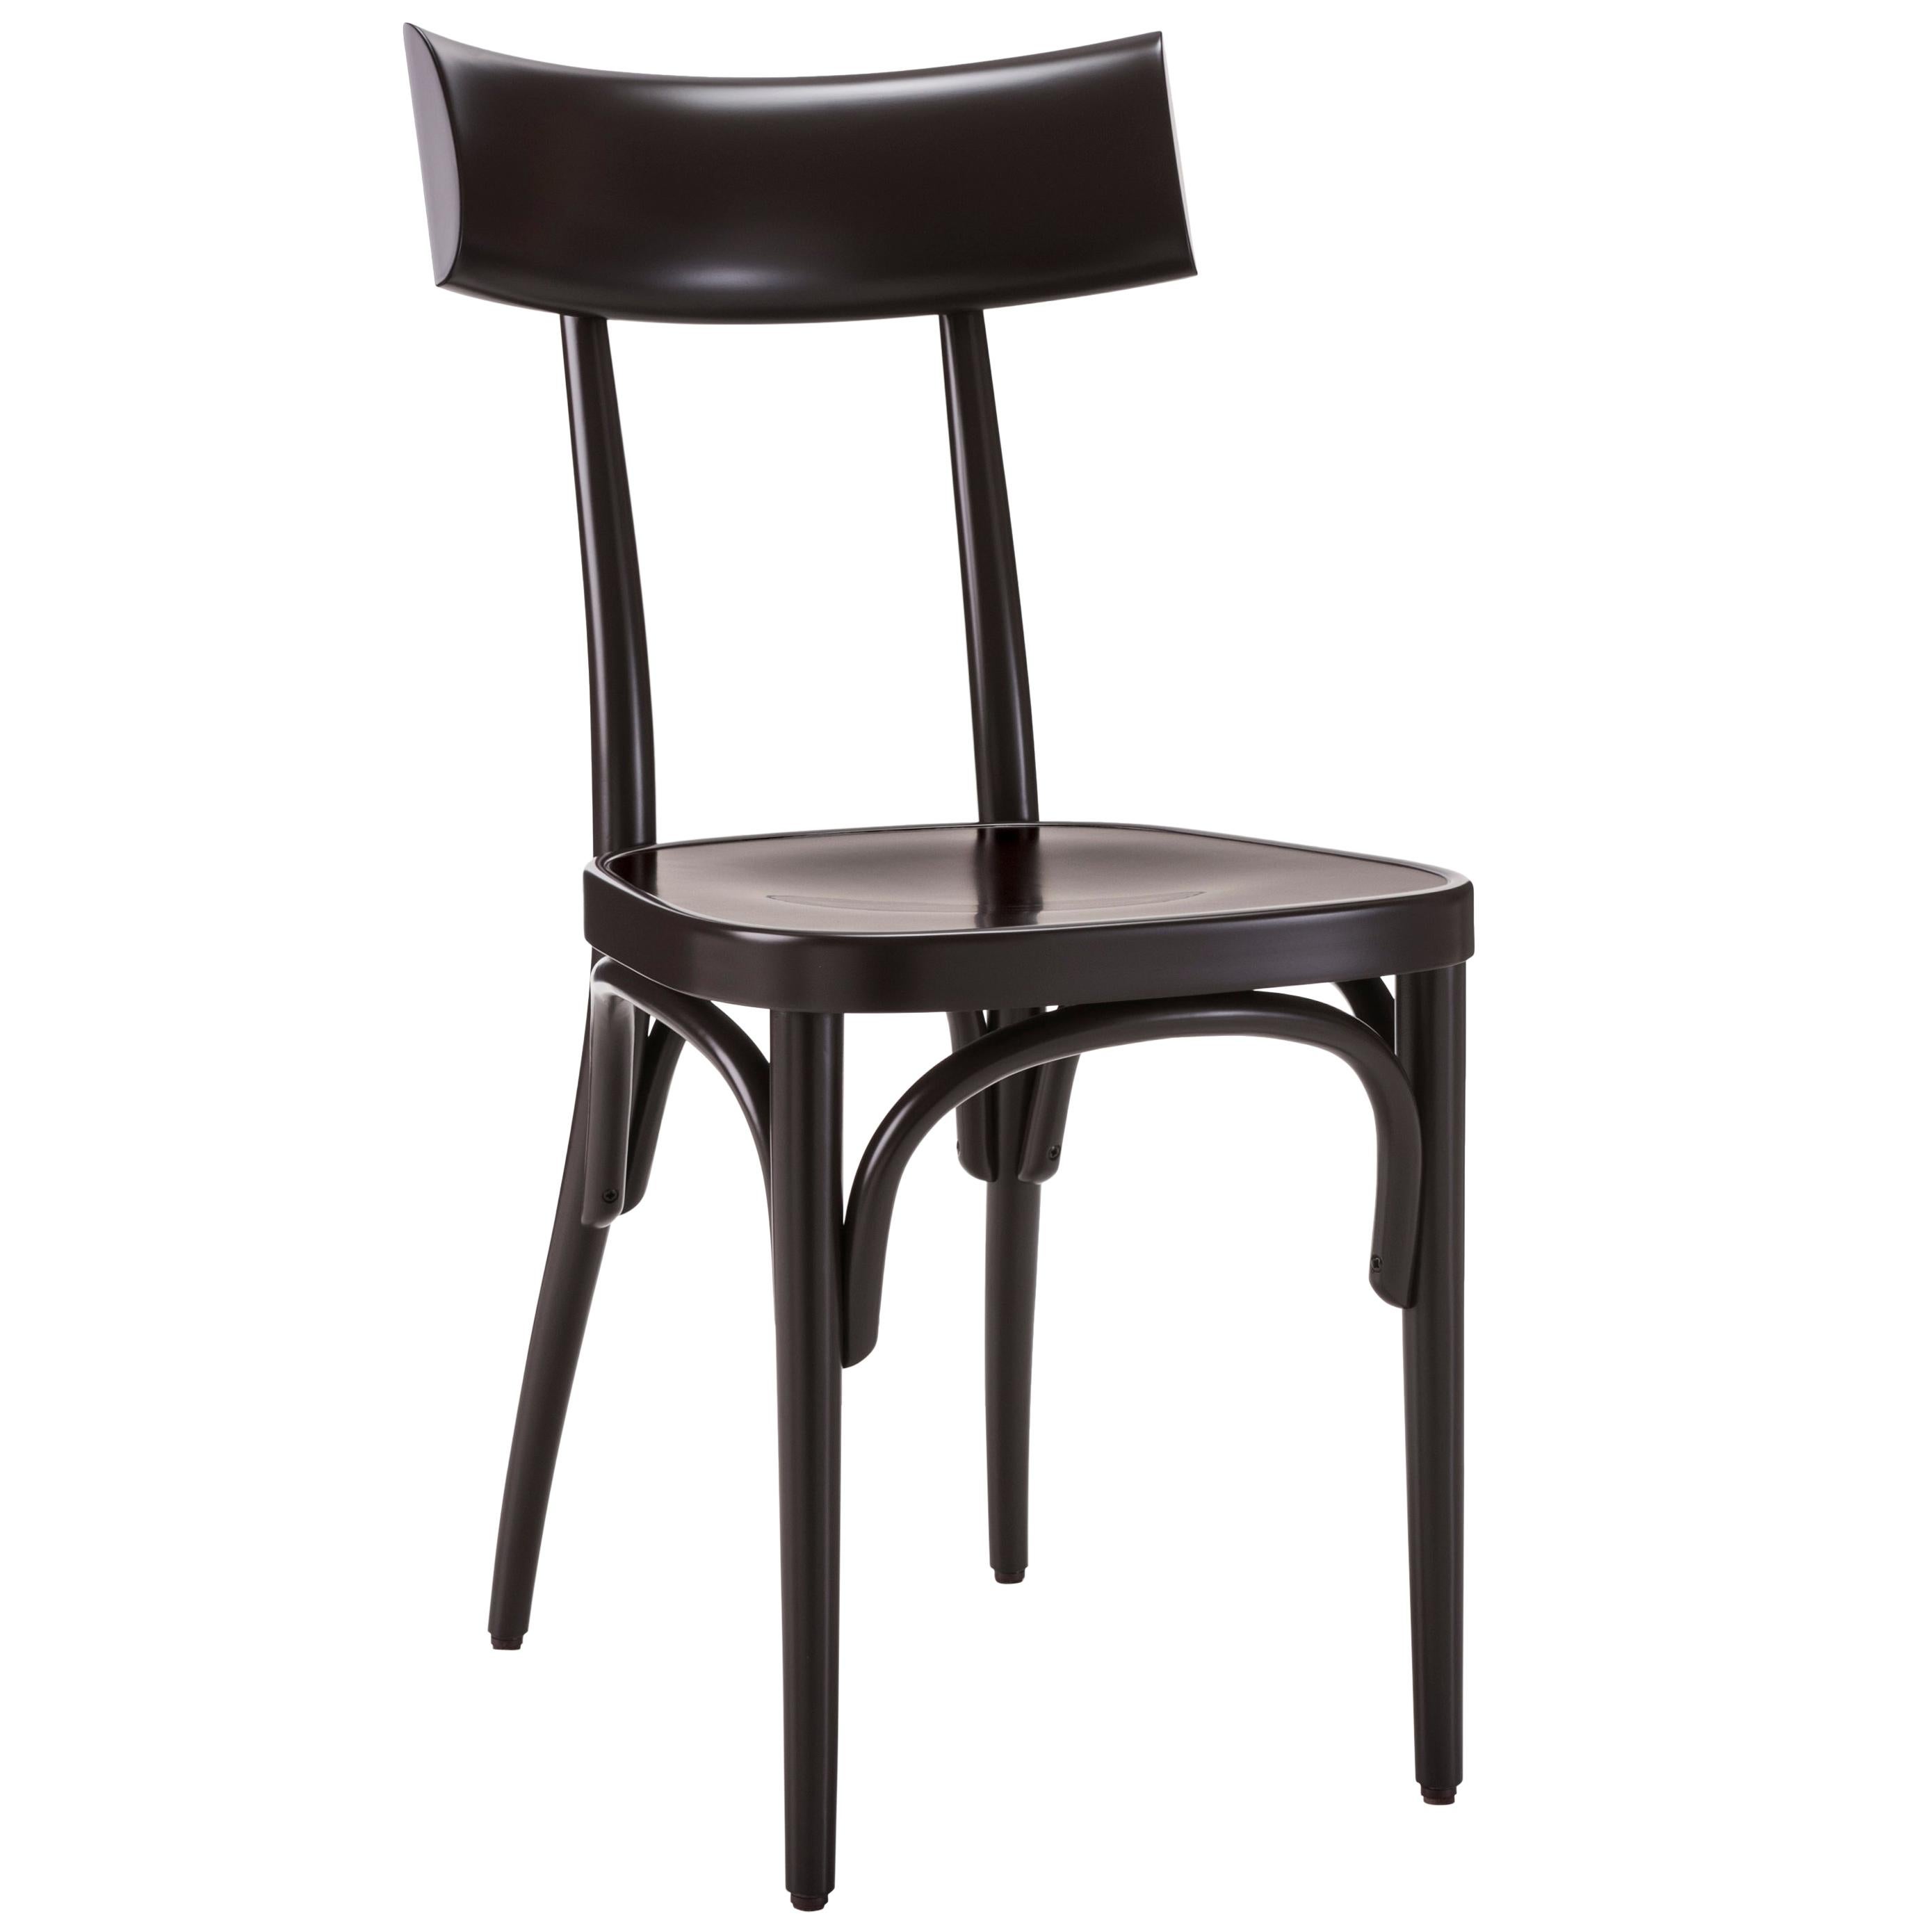 Gebrüder Thonet Vienna GmbH Czech Chair in Black with Plywood Seat